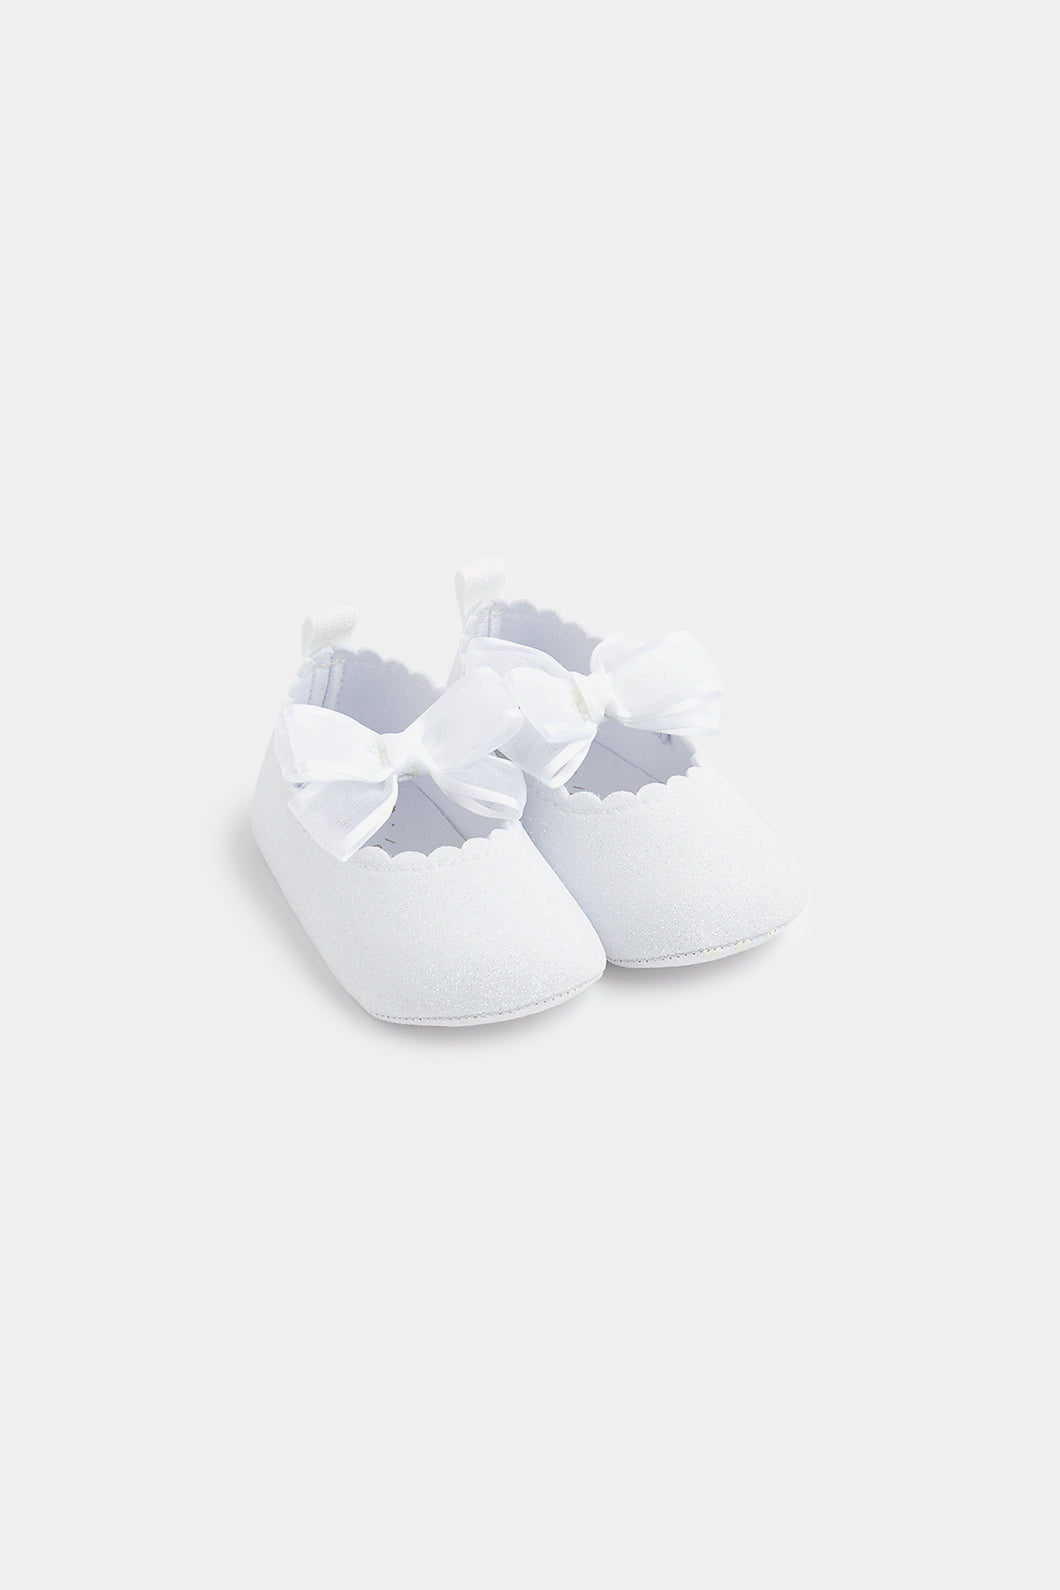 Mothercare White Glitter Pram Shoes